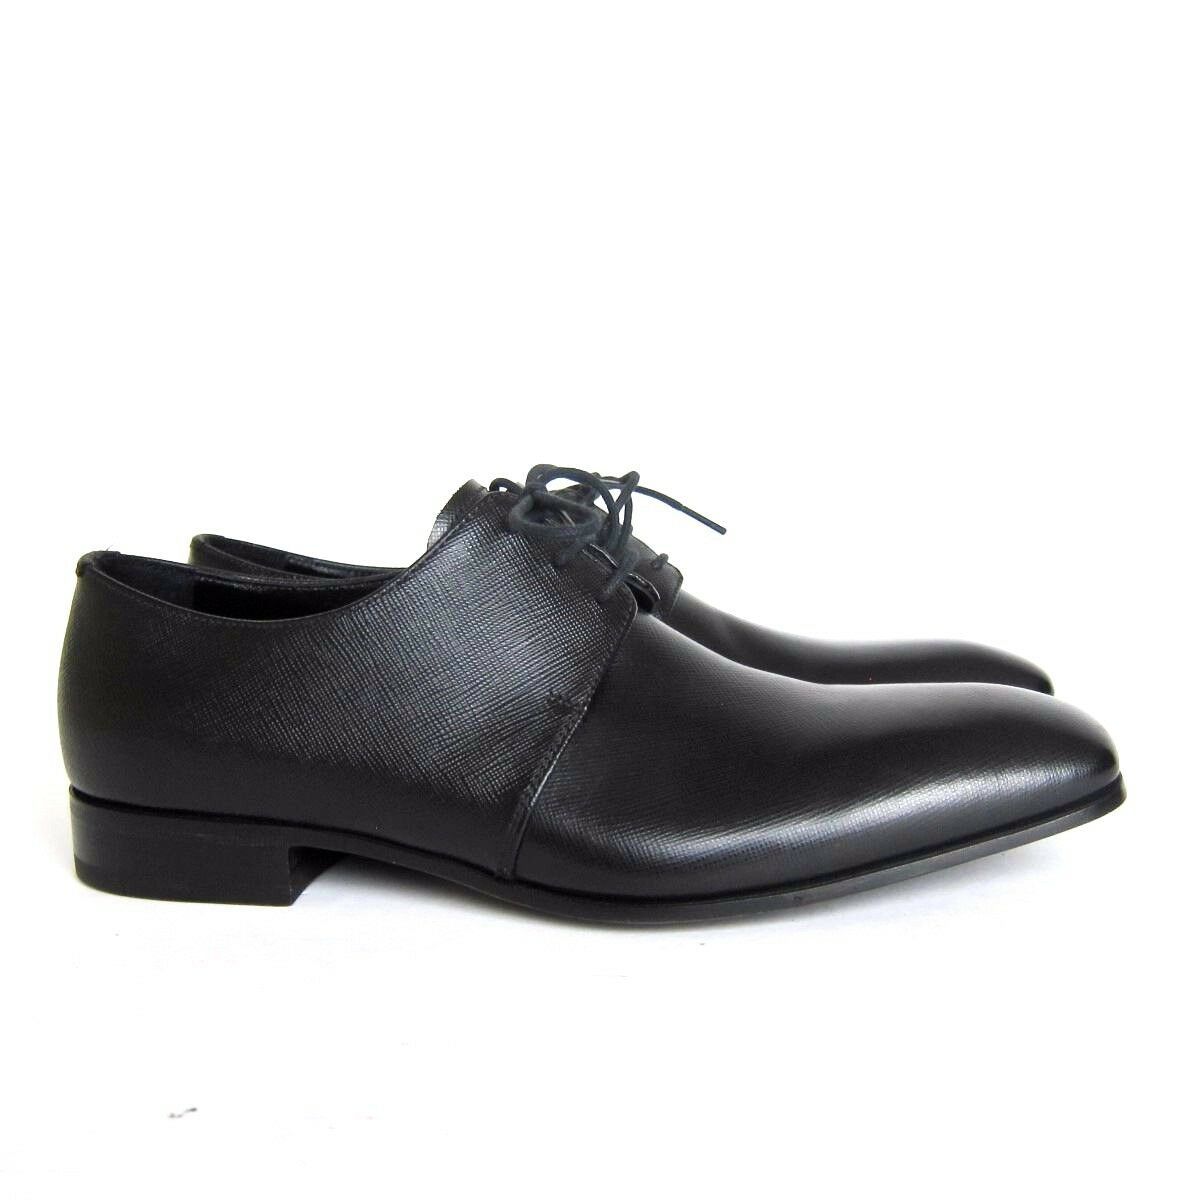 S-1673220 New Prada Calzature Saffiano Black Lace-up Shoes Size UK 6 US ...